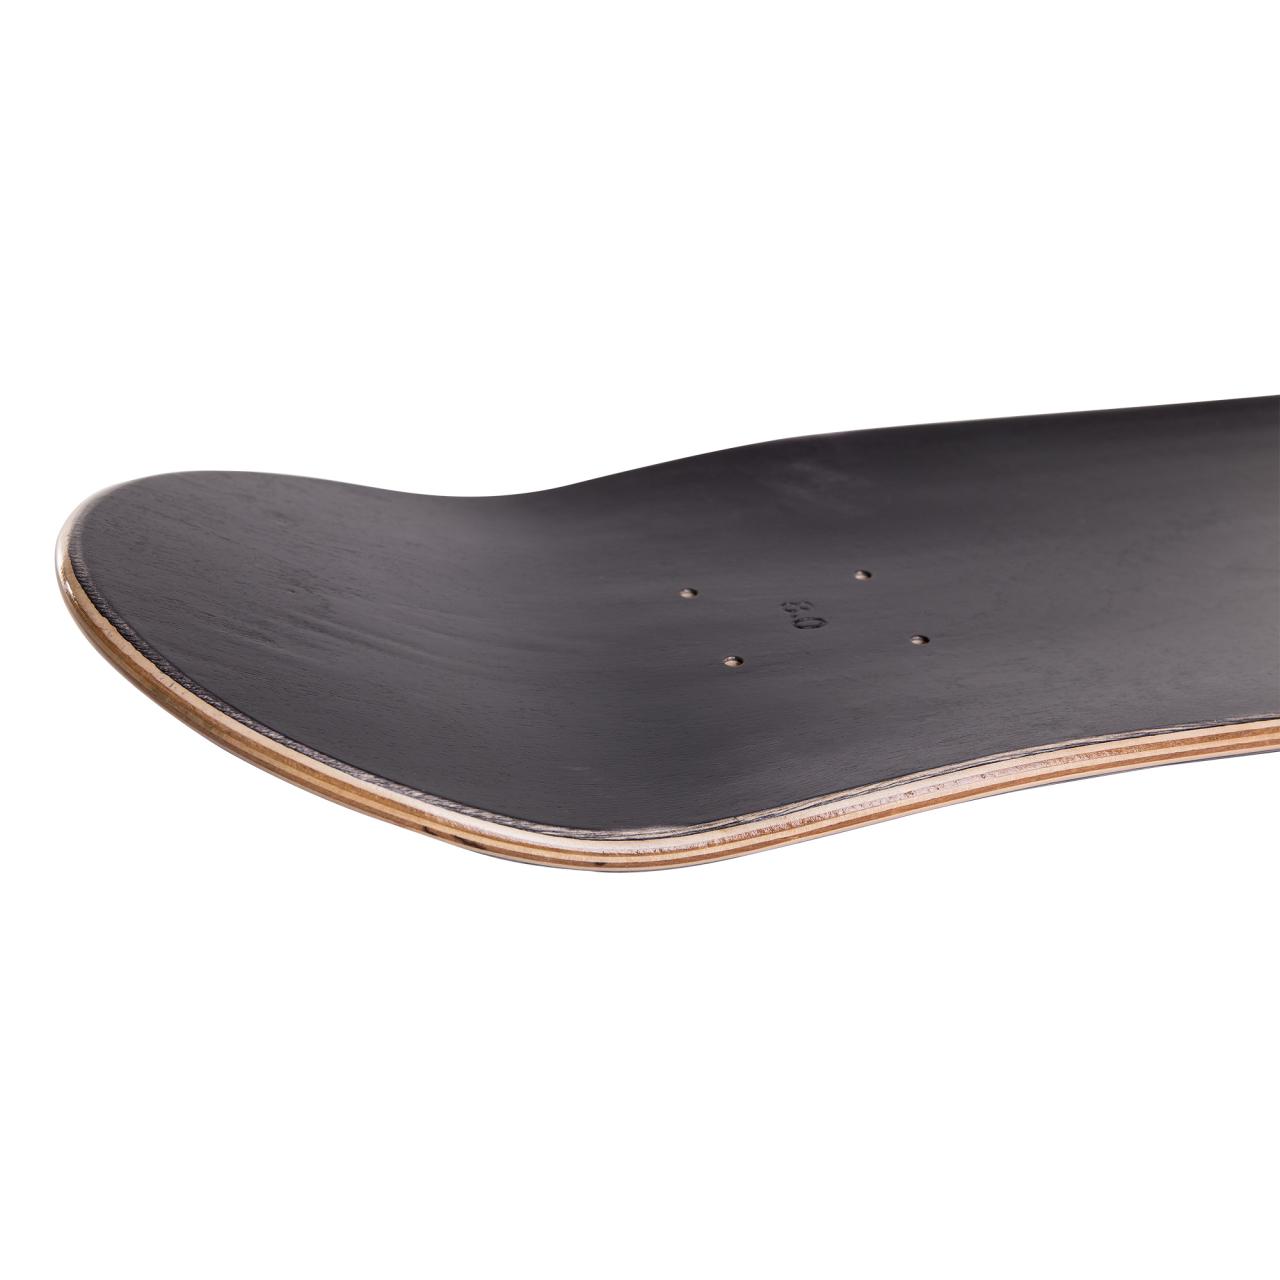 Buy Cal 7 Blank Skateboard Decks, Set of 5 Online in Italy. B079C3WKT5